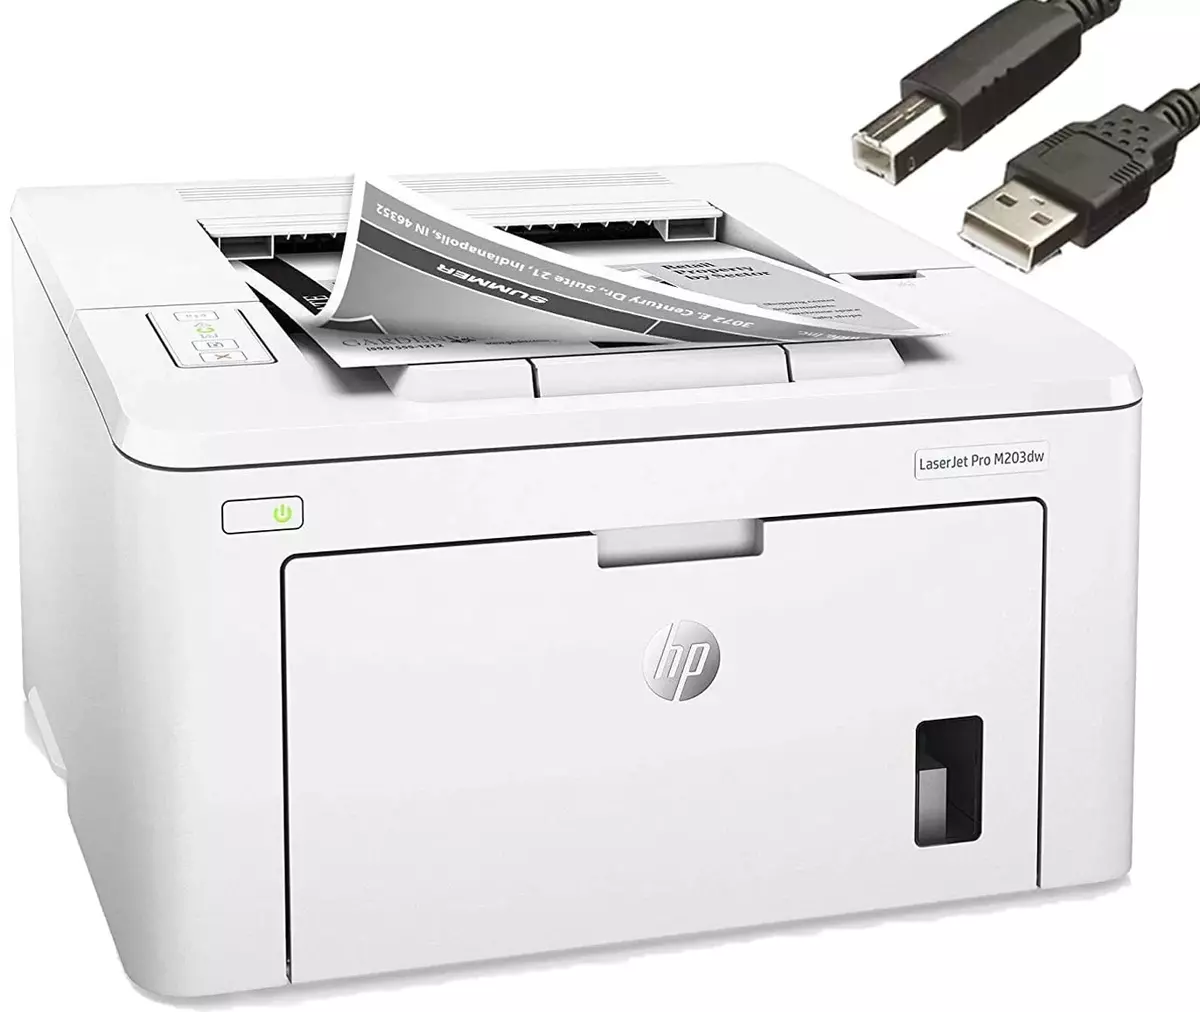 HP LaserJet Pro M203dw laser printer